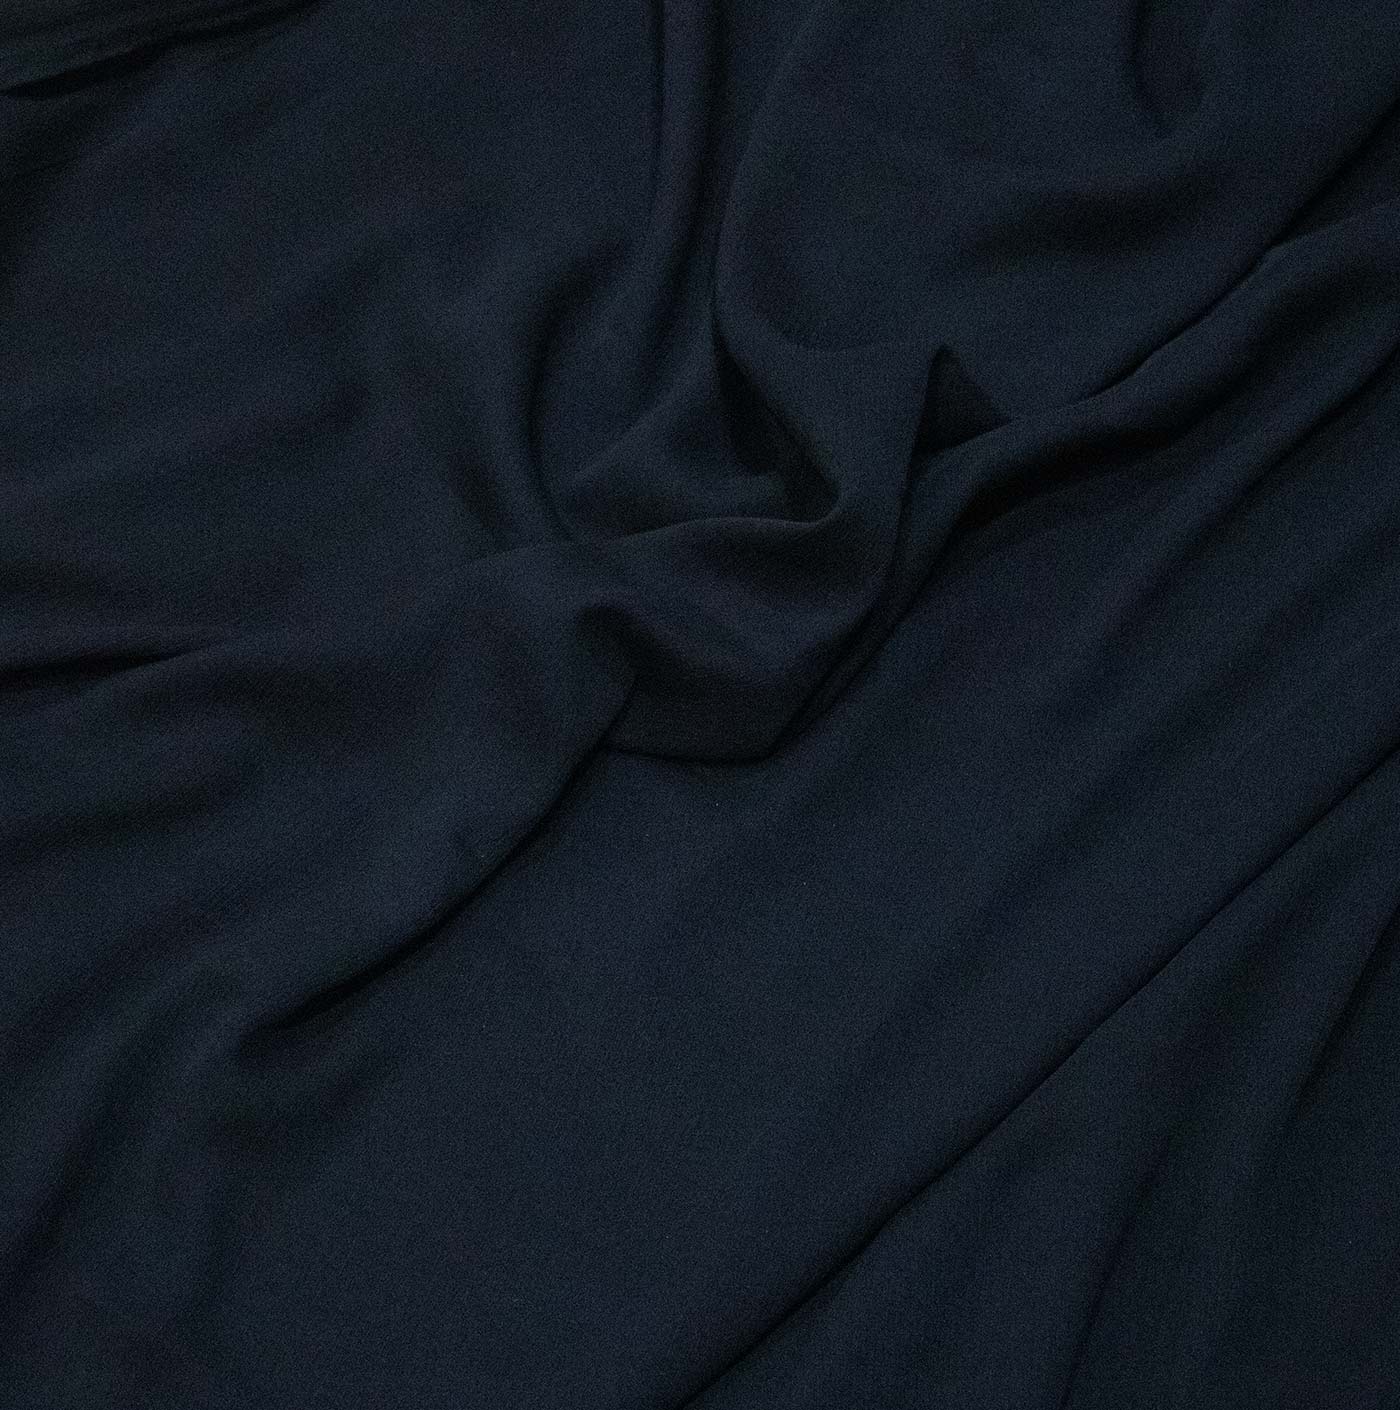 Black Crinkle Chiffon Fabric